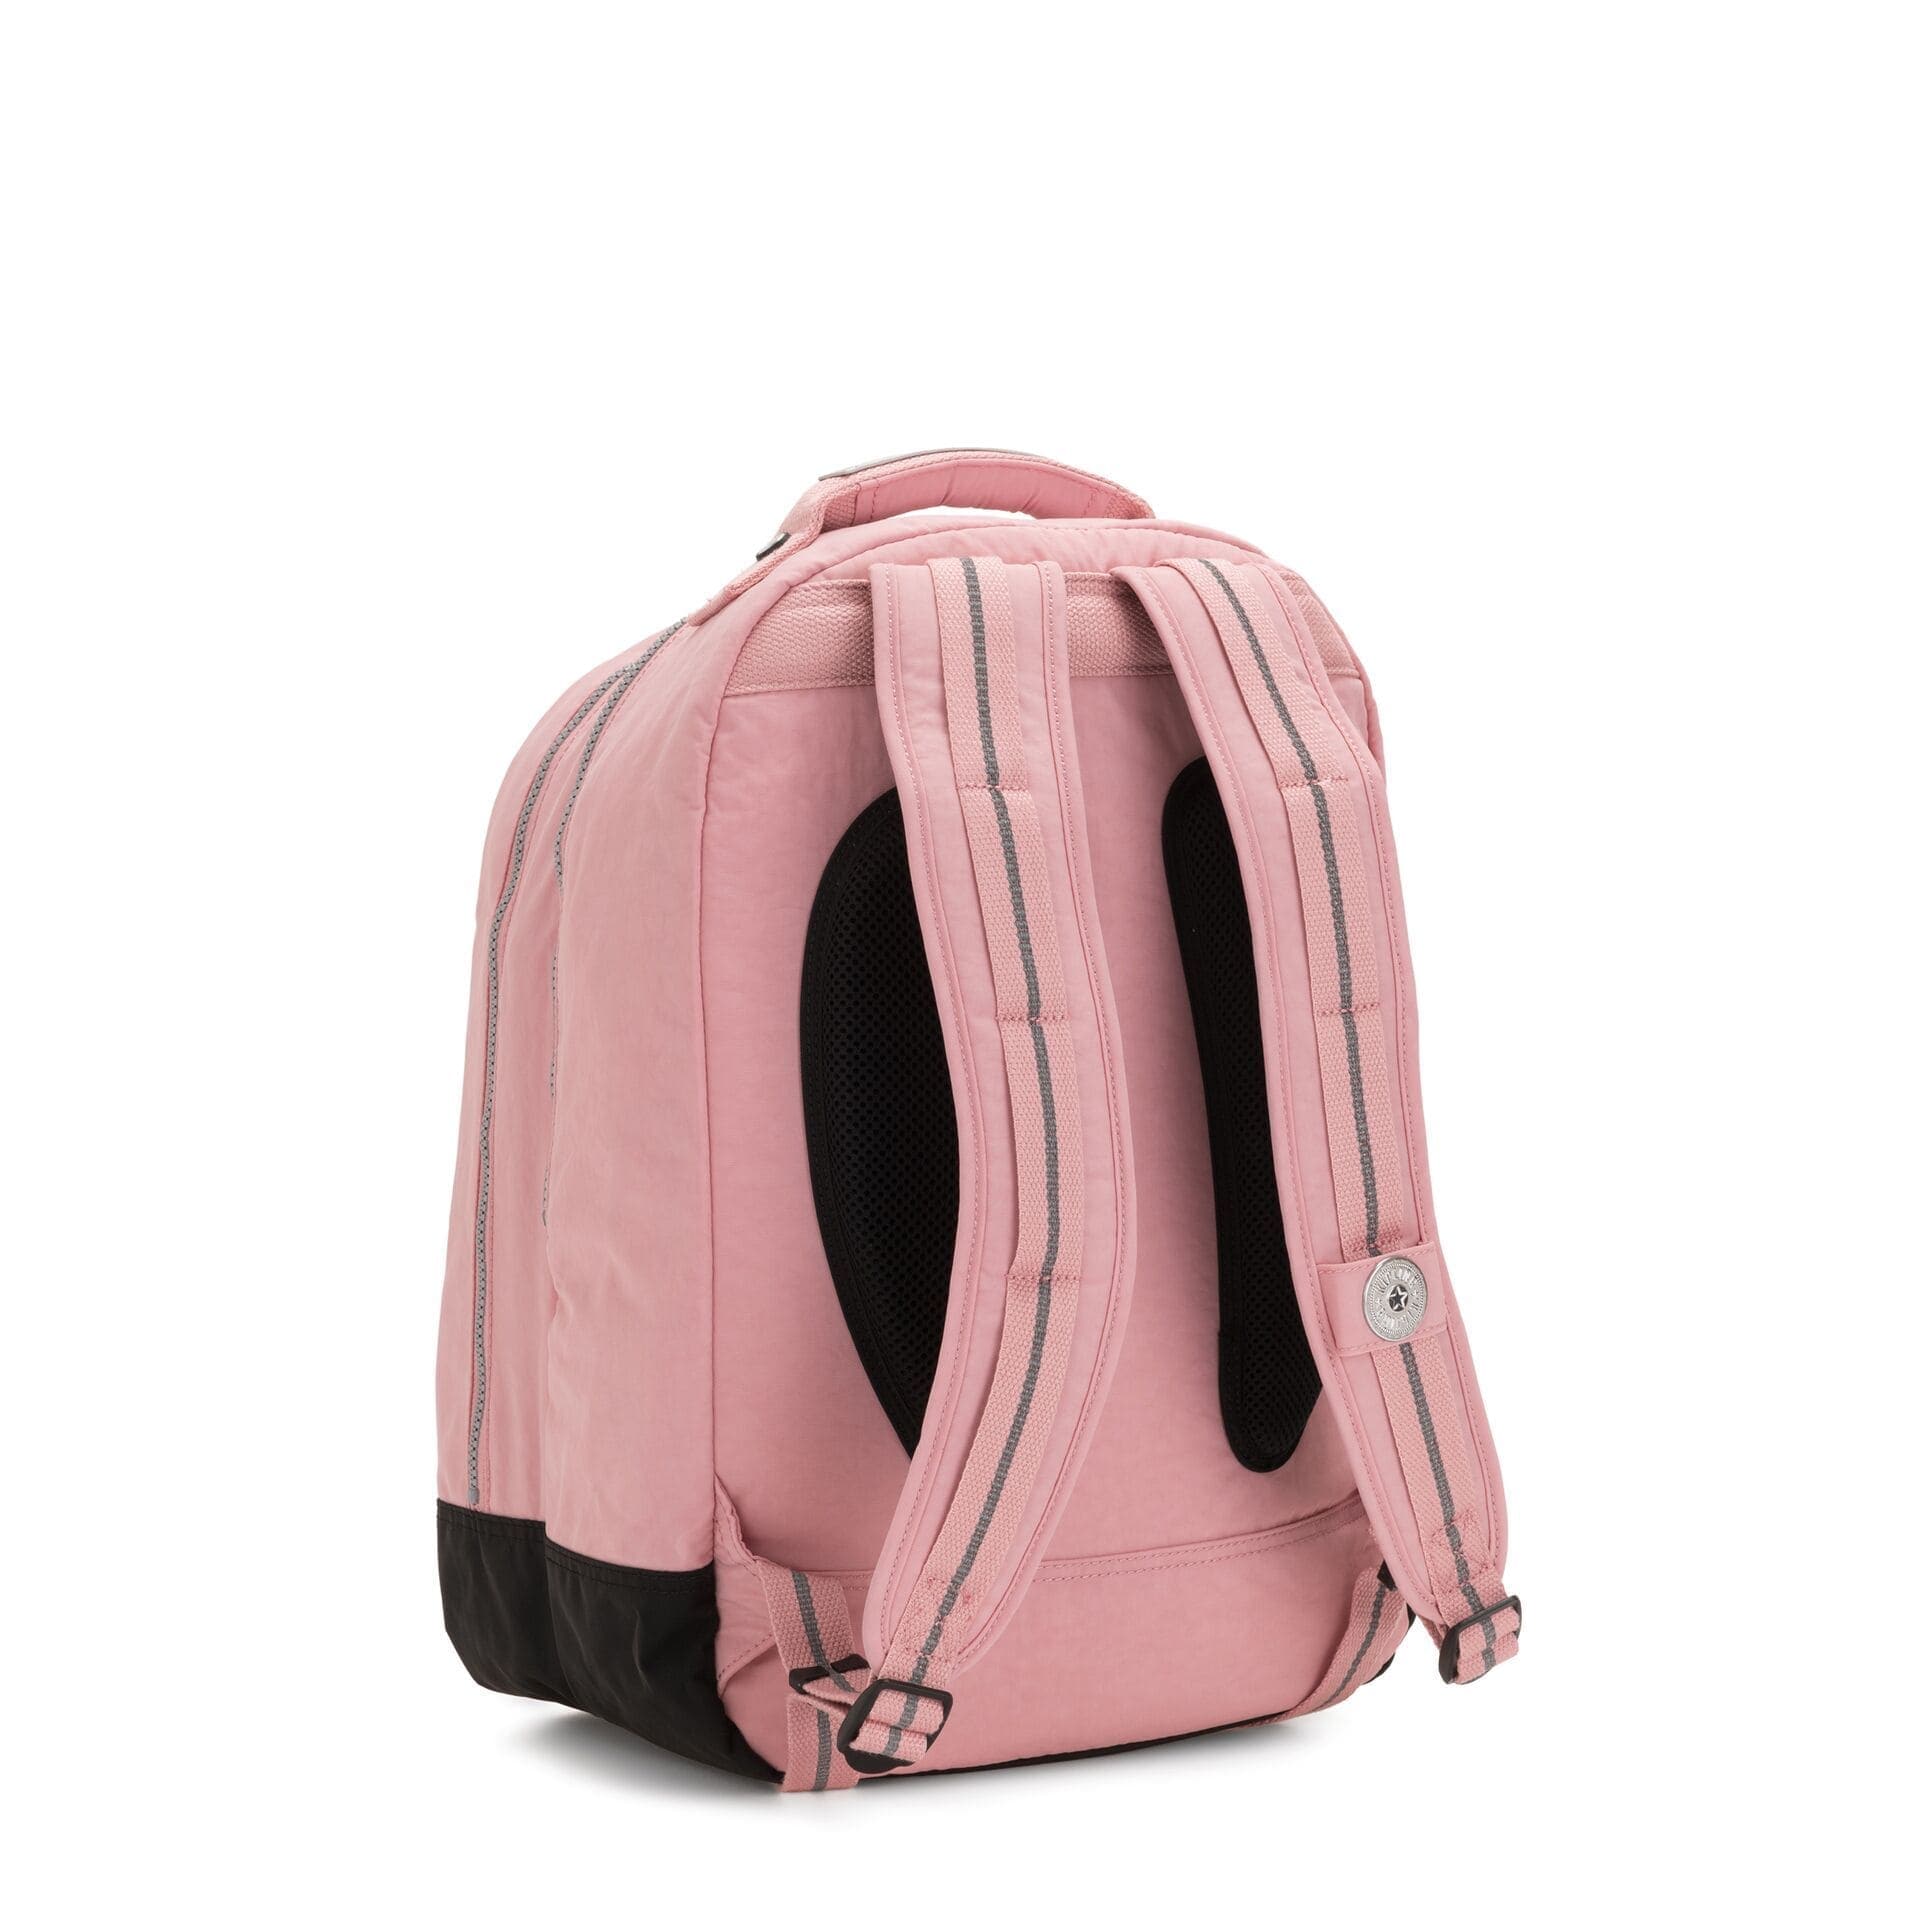 KIPLING-CLASS ROOM-Large backpack (with laptop protection)-Bridal Rose-I4053-46Y - I4053-46Y